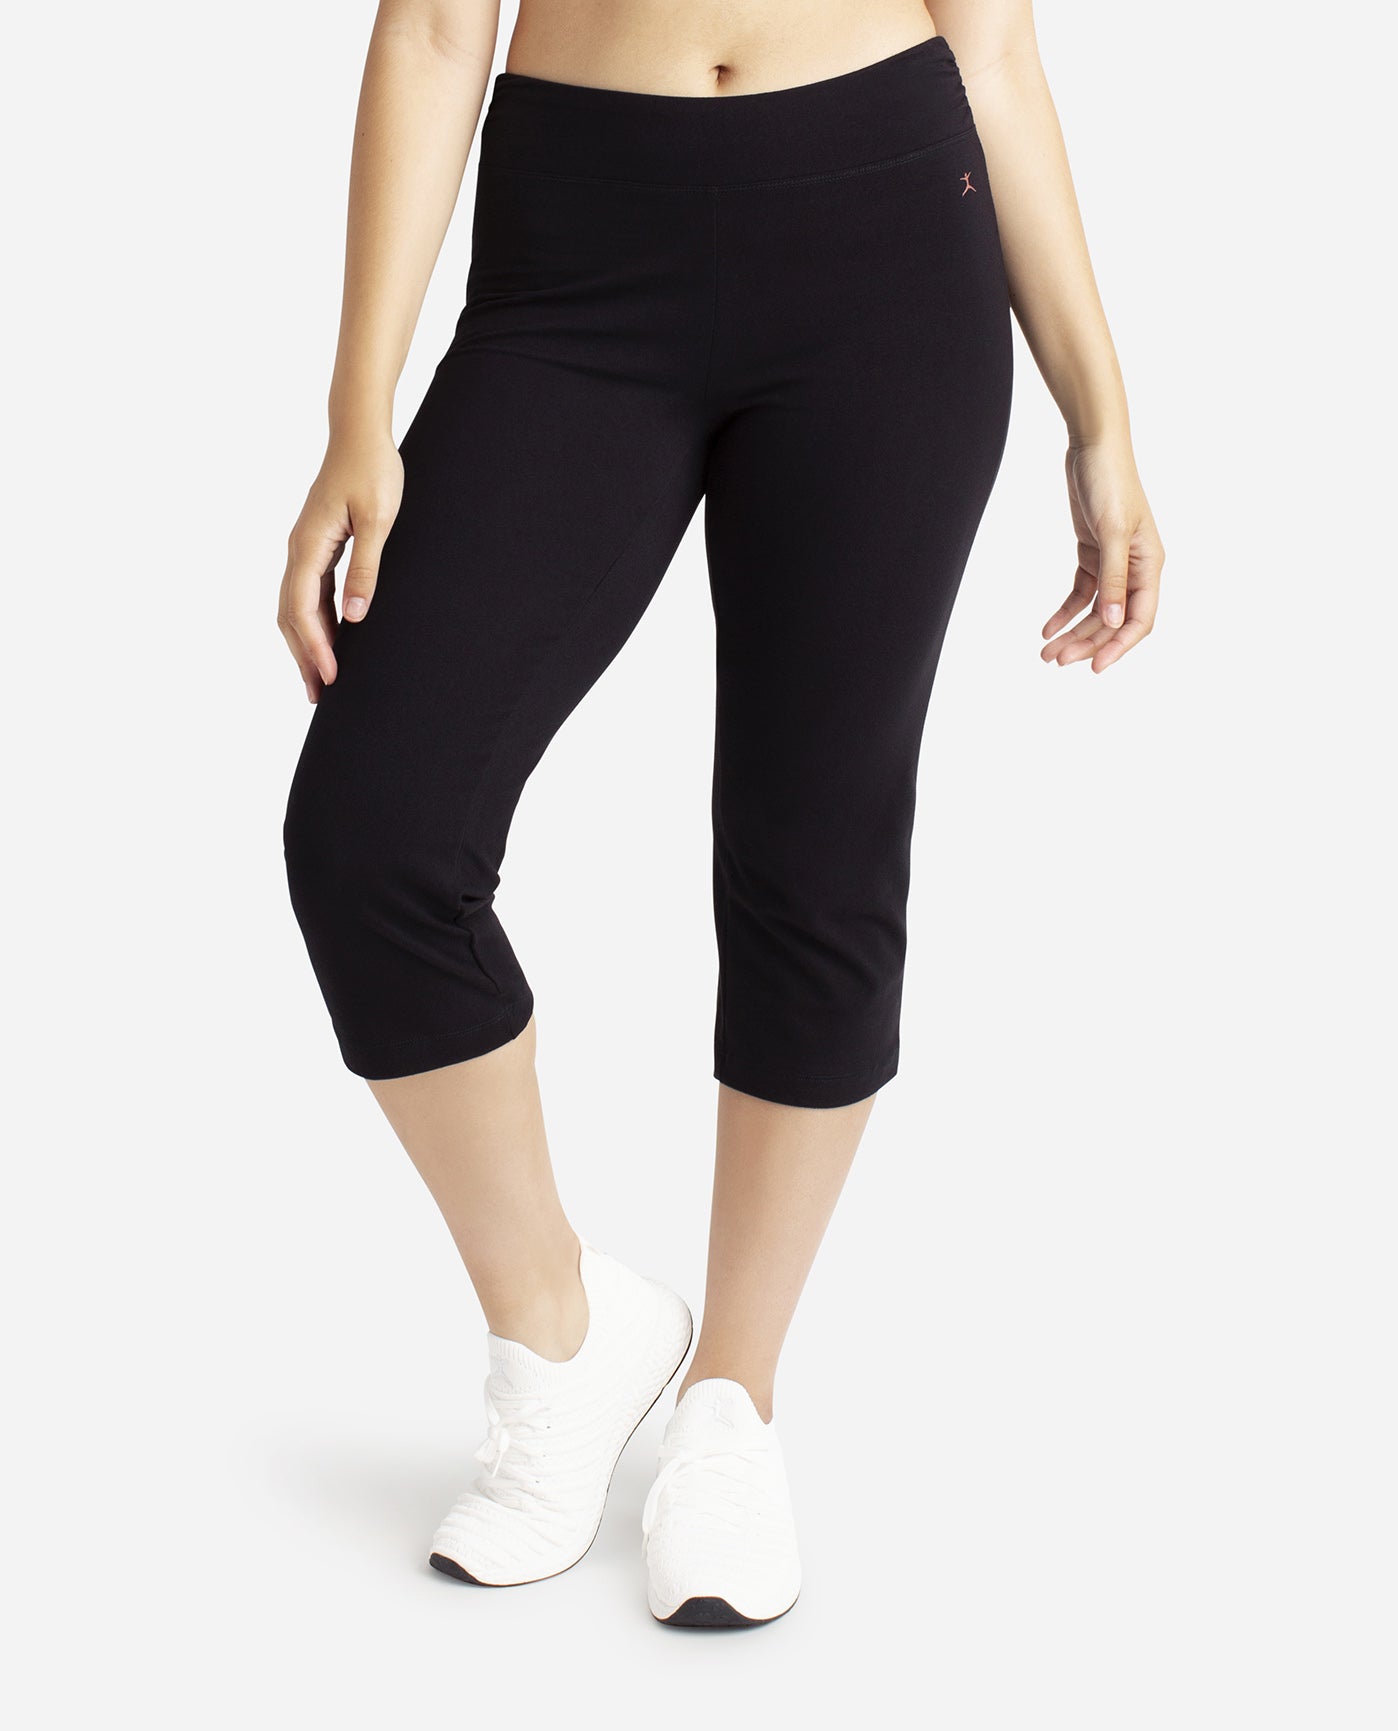 Women's Sleek Fit Crop Pant, Crop Pants